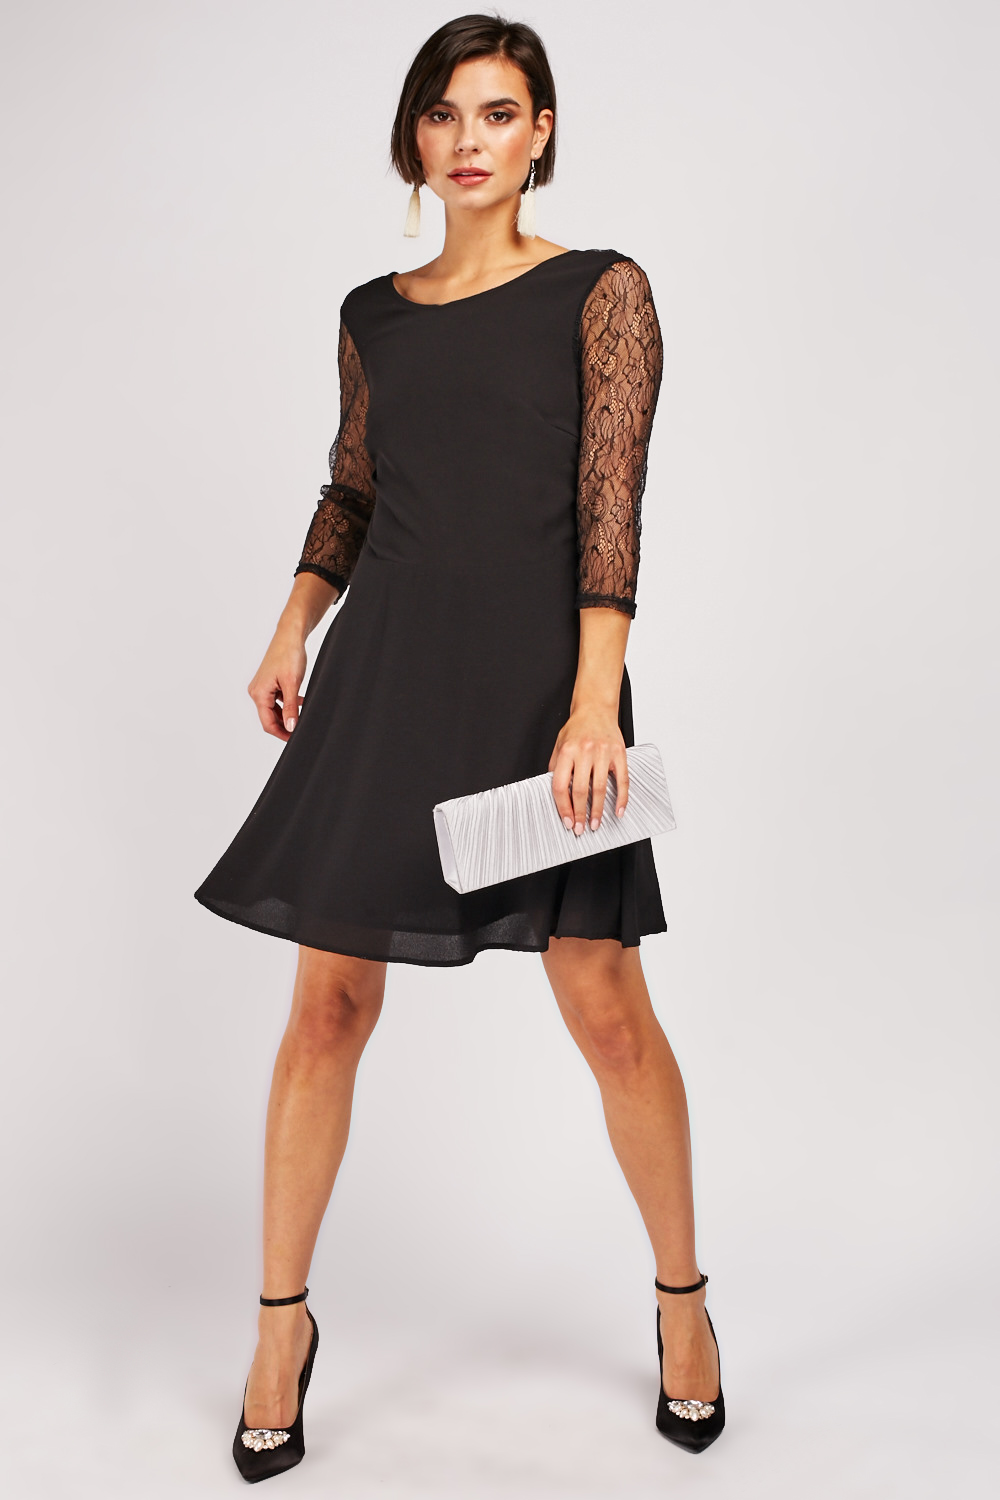 Sheer Lace Sleeve Mini Dress - Just $7